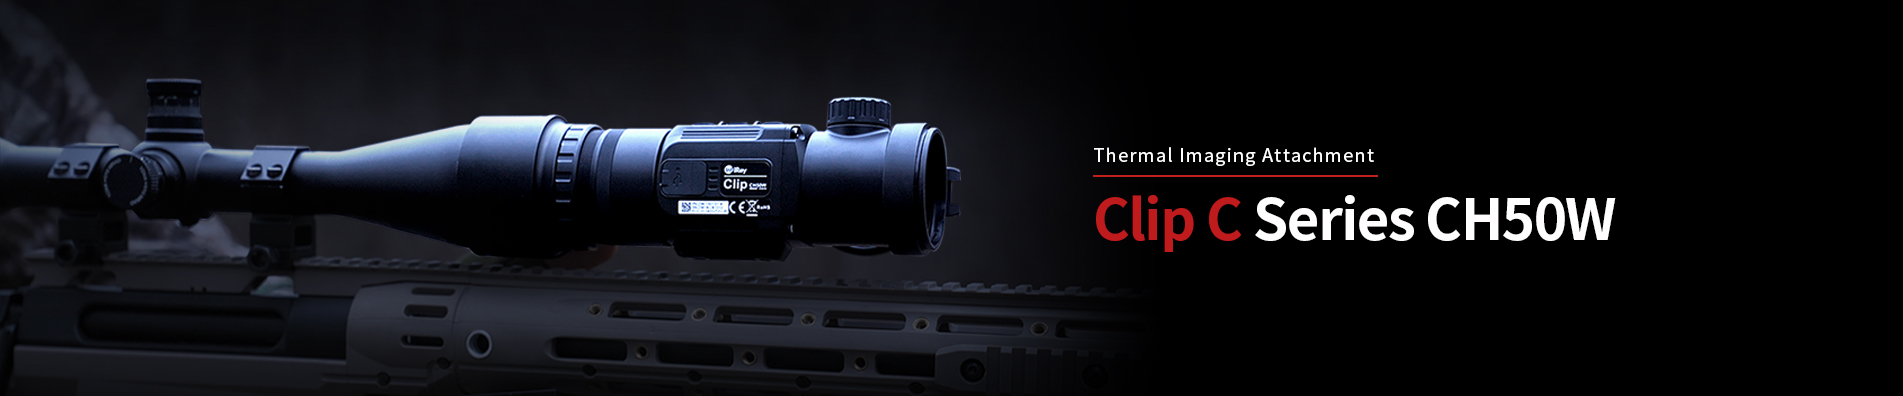 Thermal Imaging Attachment Clip CH50W